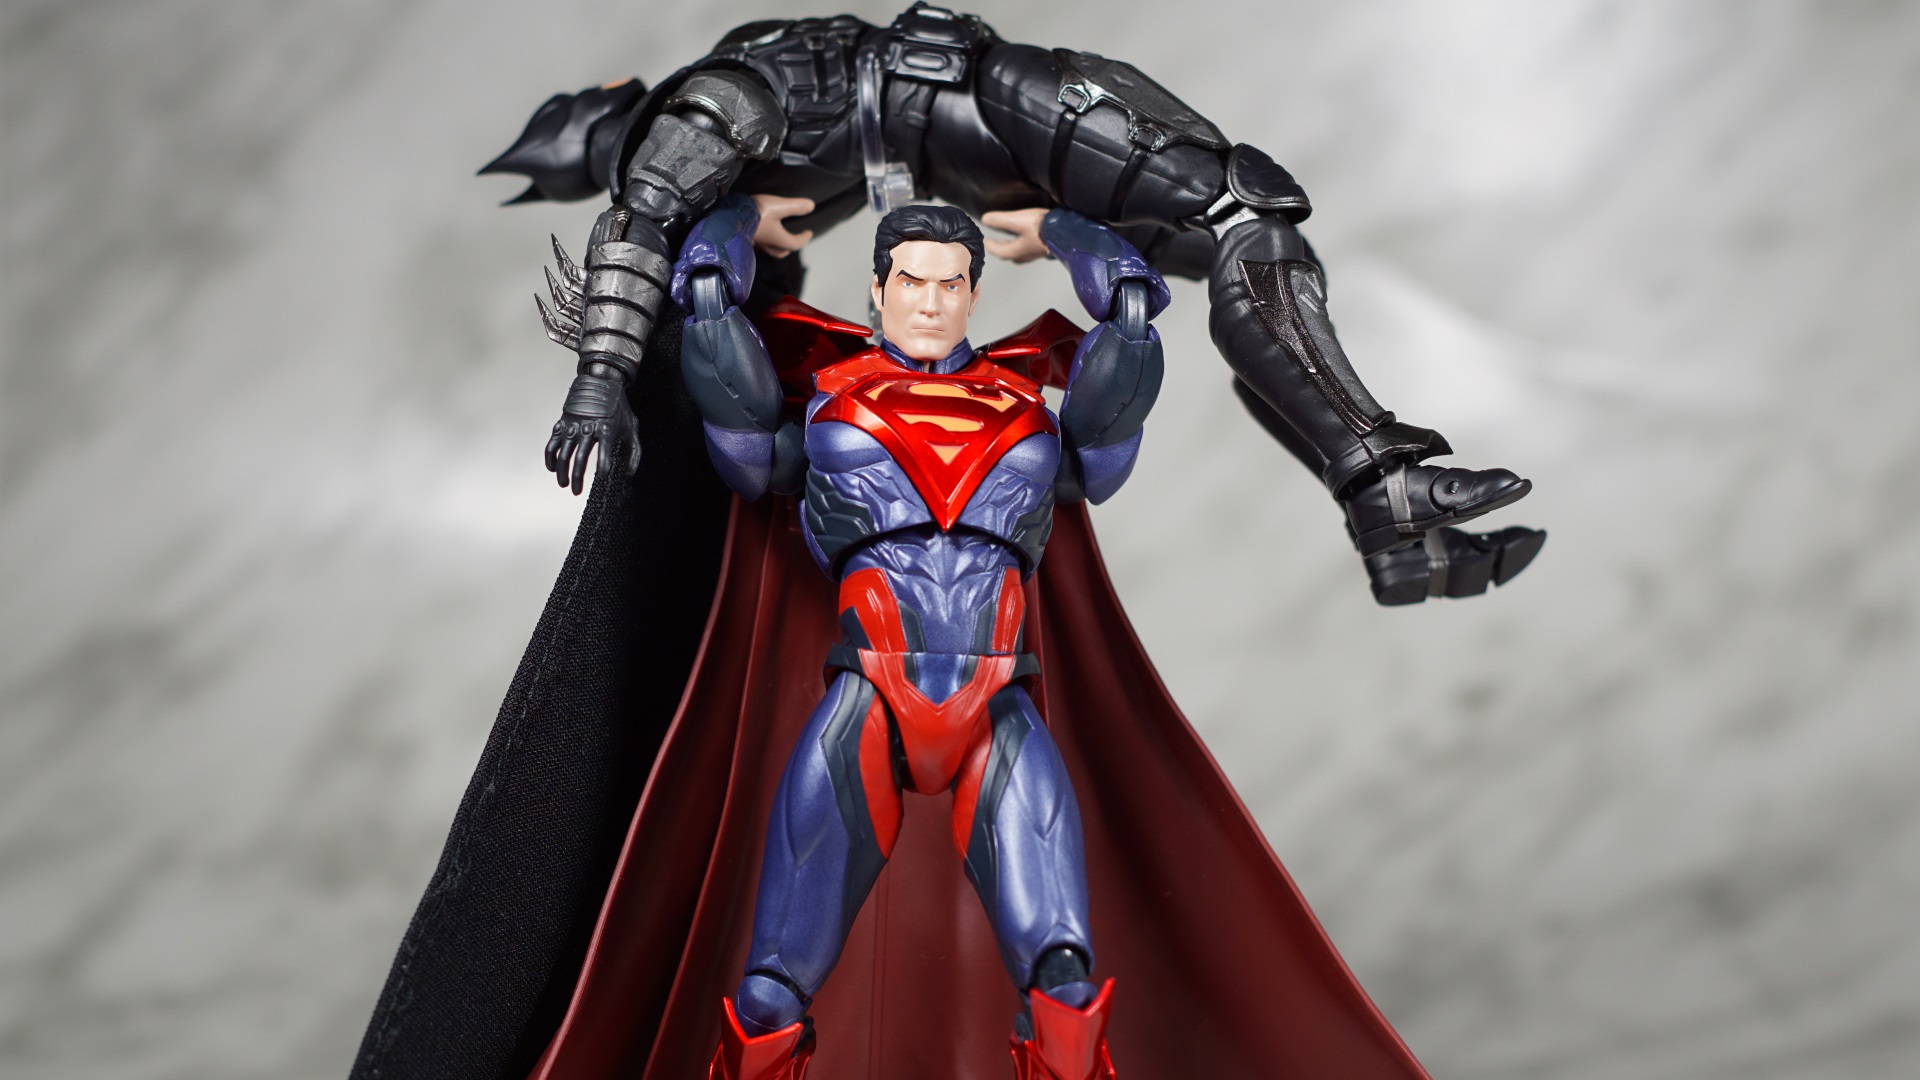 Injustice Batman vs Superman 06 by Infinitevirtue on DeviantArt